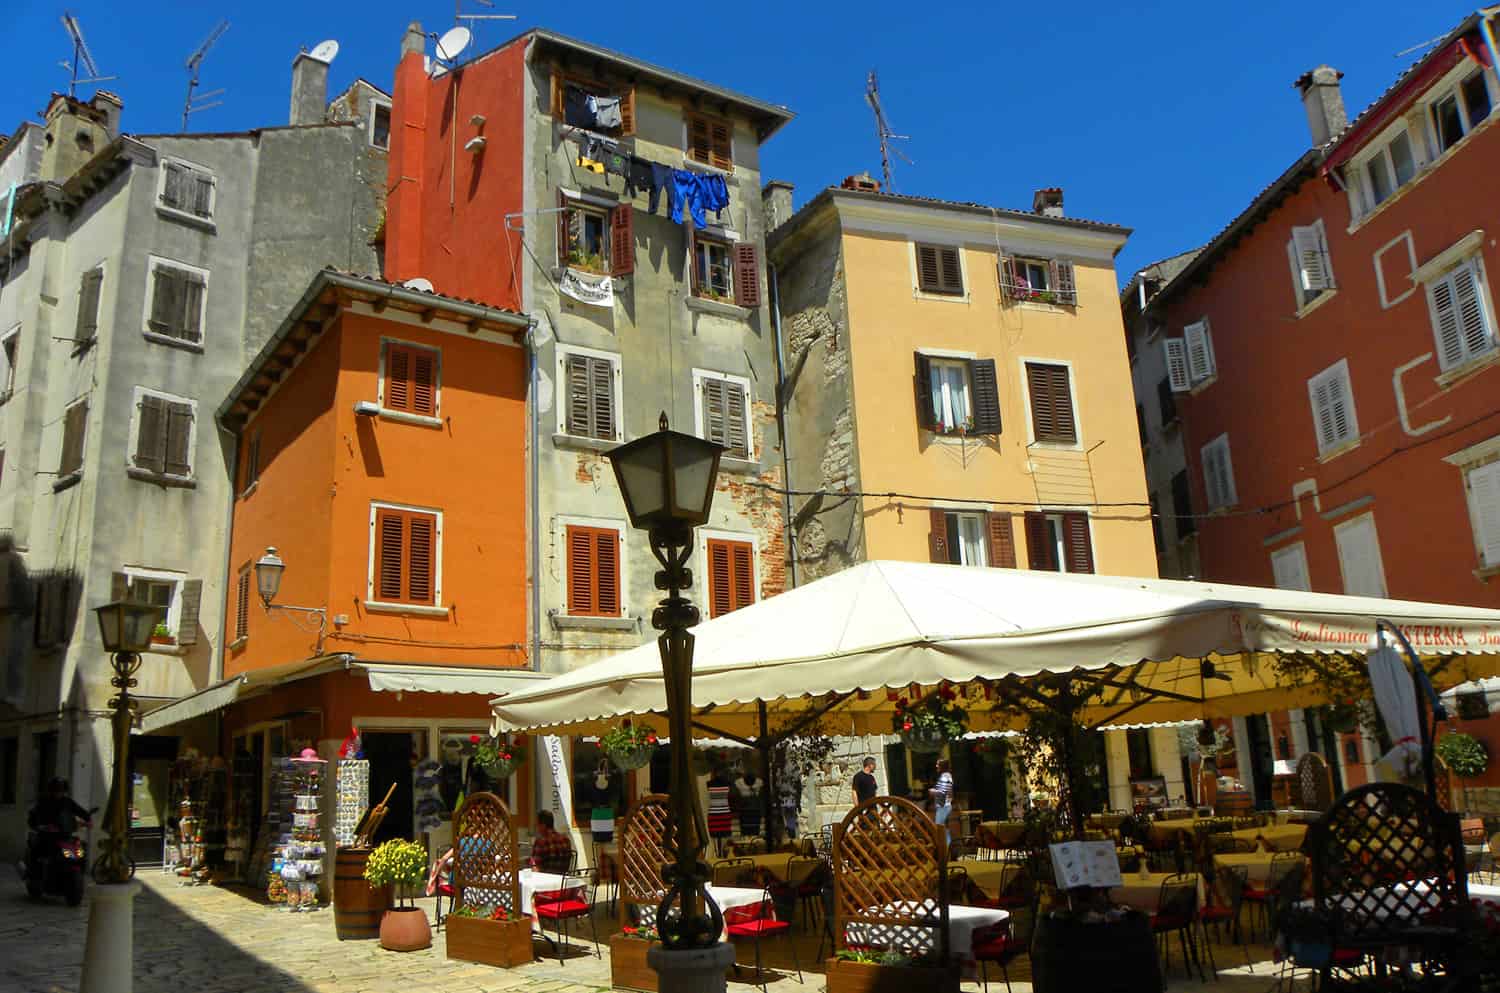 restaurants and cafes in Rovinj, Croatia